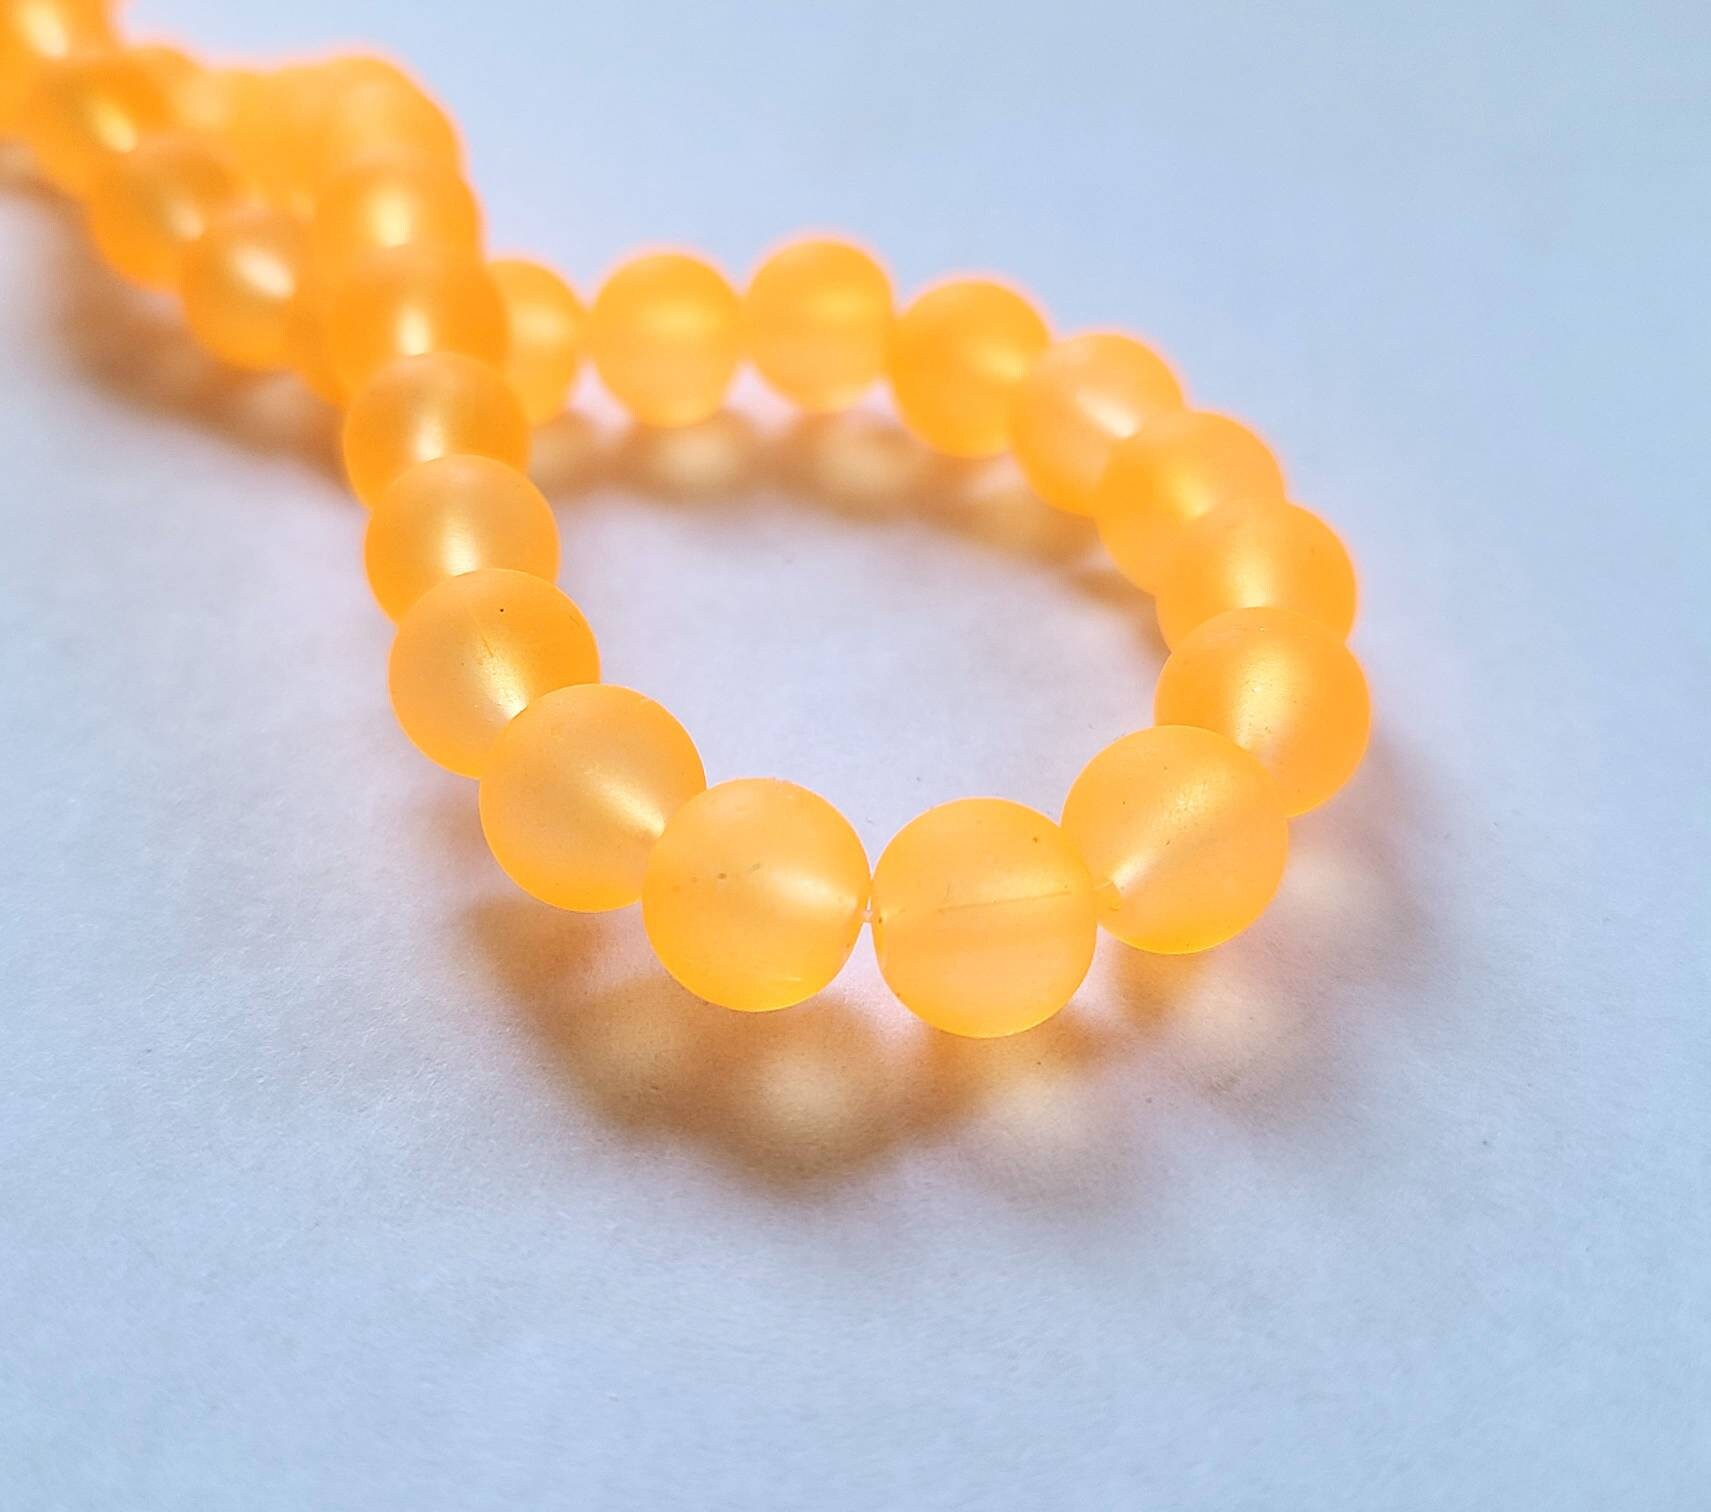 Buy Orange Néon Fluorescent Glass Beads Online In India -  India